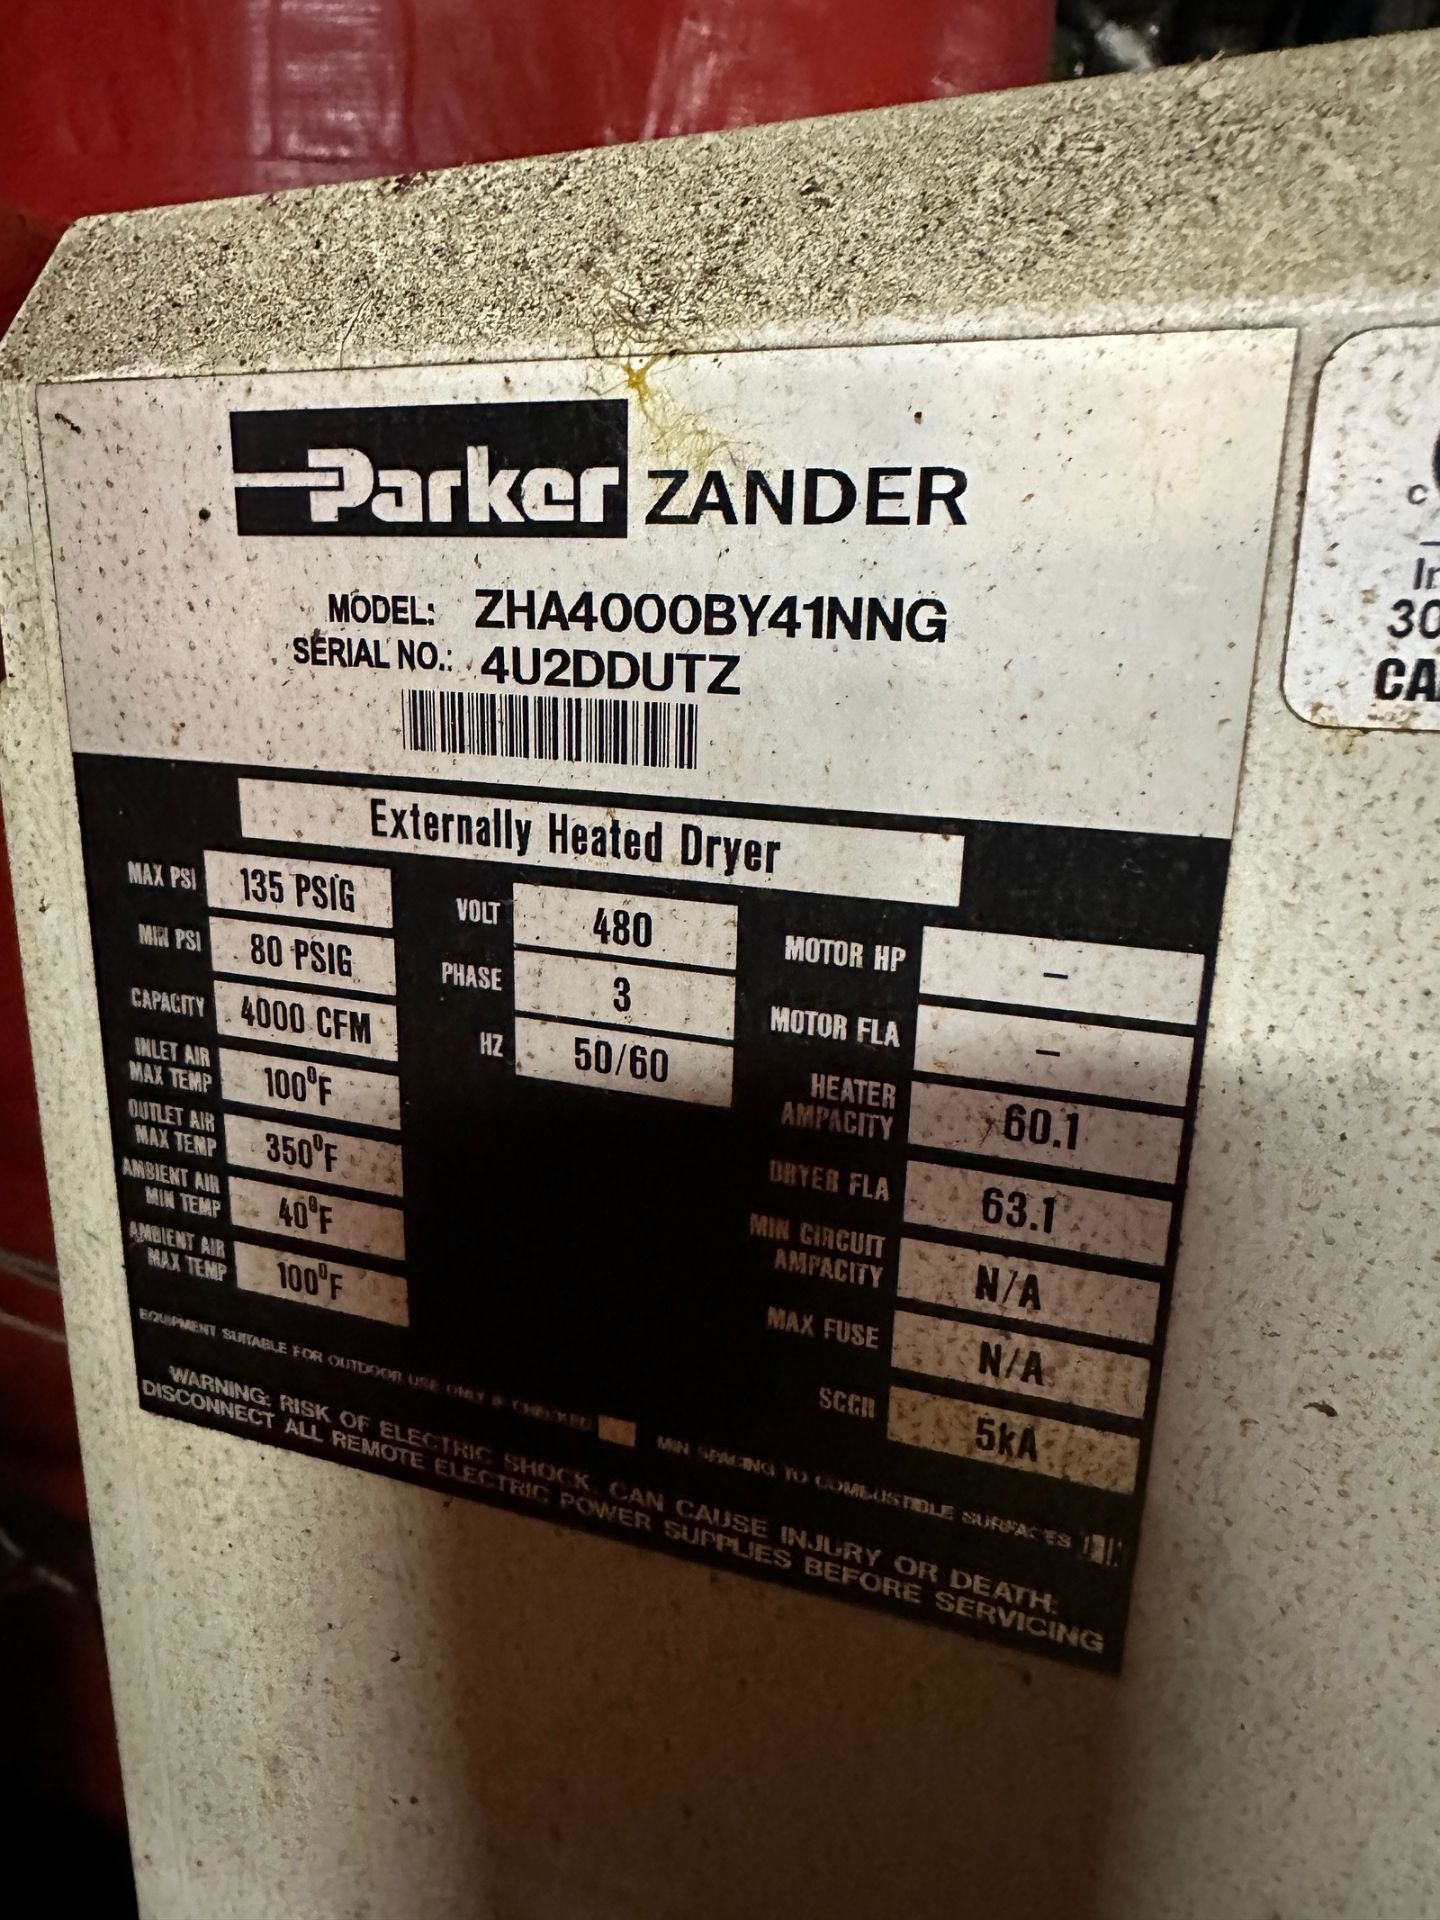 Parker Zander Externally Heated Dryer Skid - Model ZHA4000BY41NNG | Rig Fee $500 - Image 6 of 6